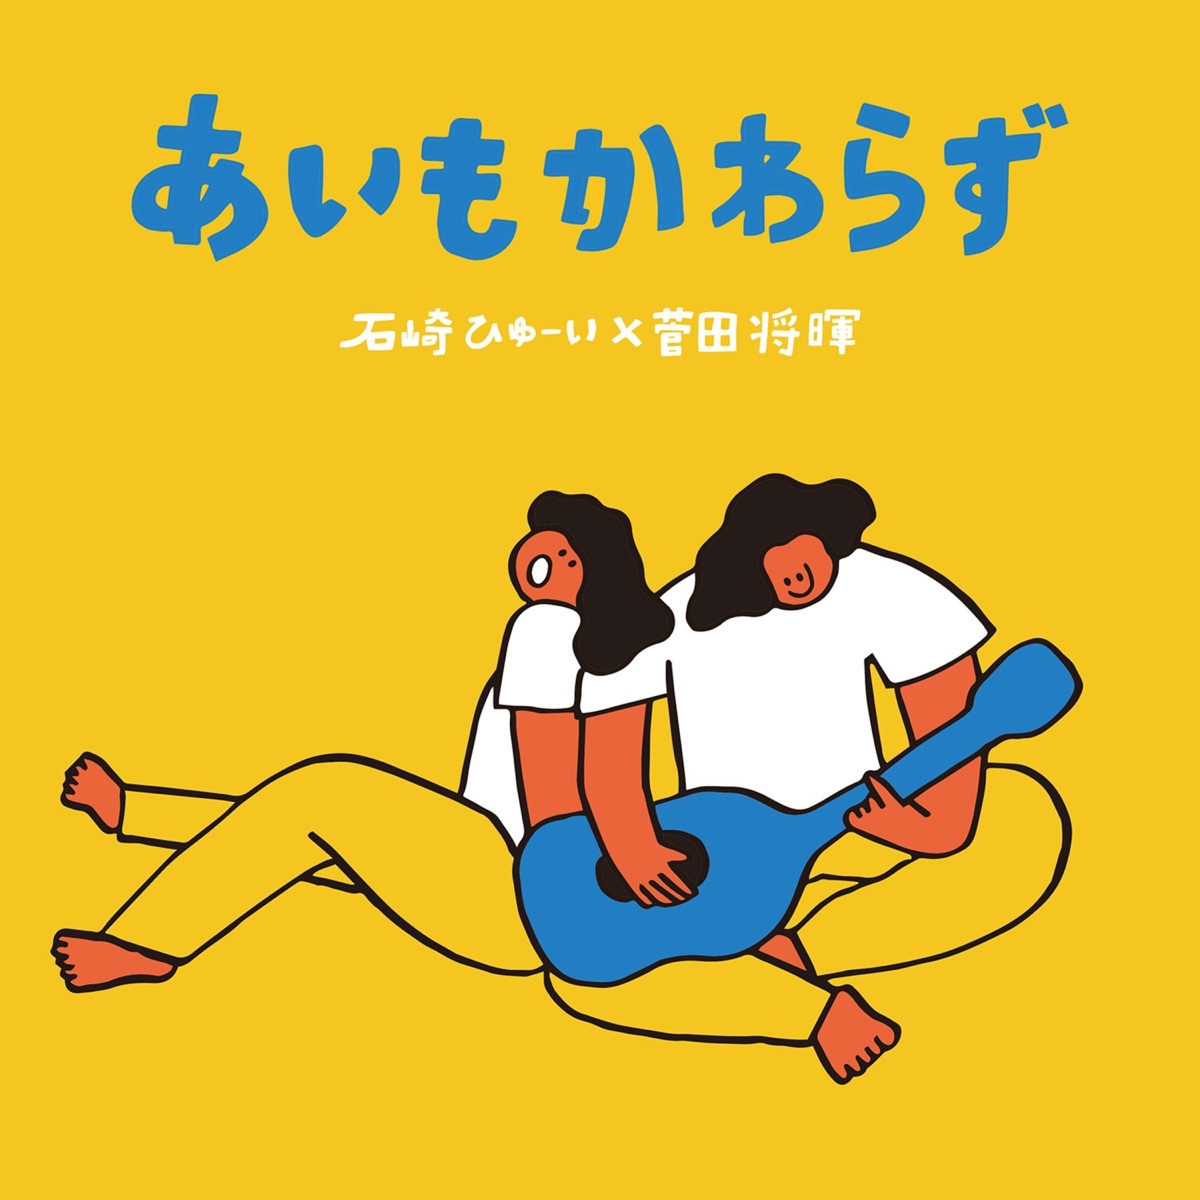 Cover art for『Huwie Ishizaki×Masaki Suda - Ai mo Kawarazu』from the release『Ai mo Kawarazu』